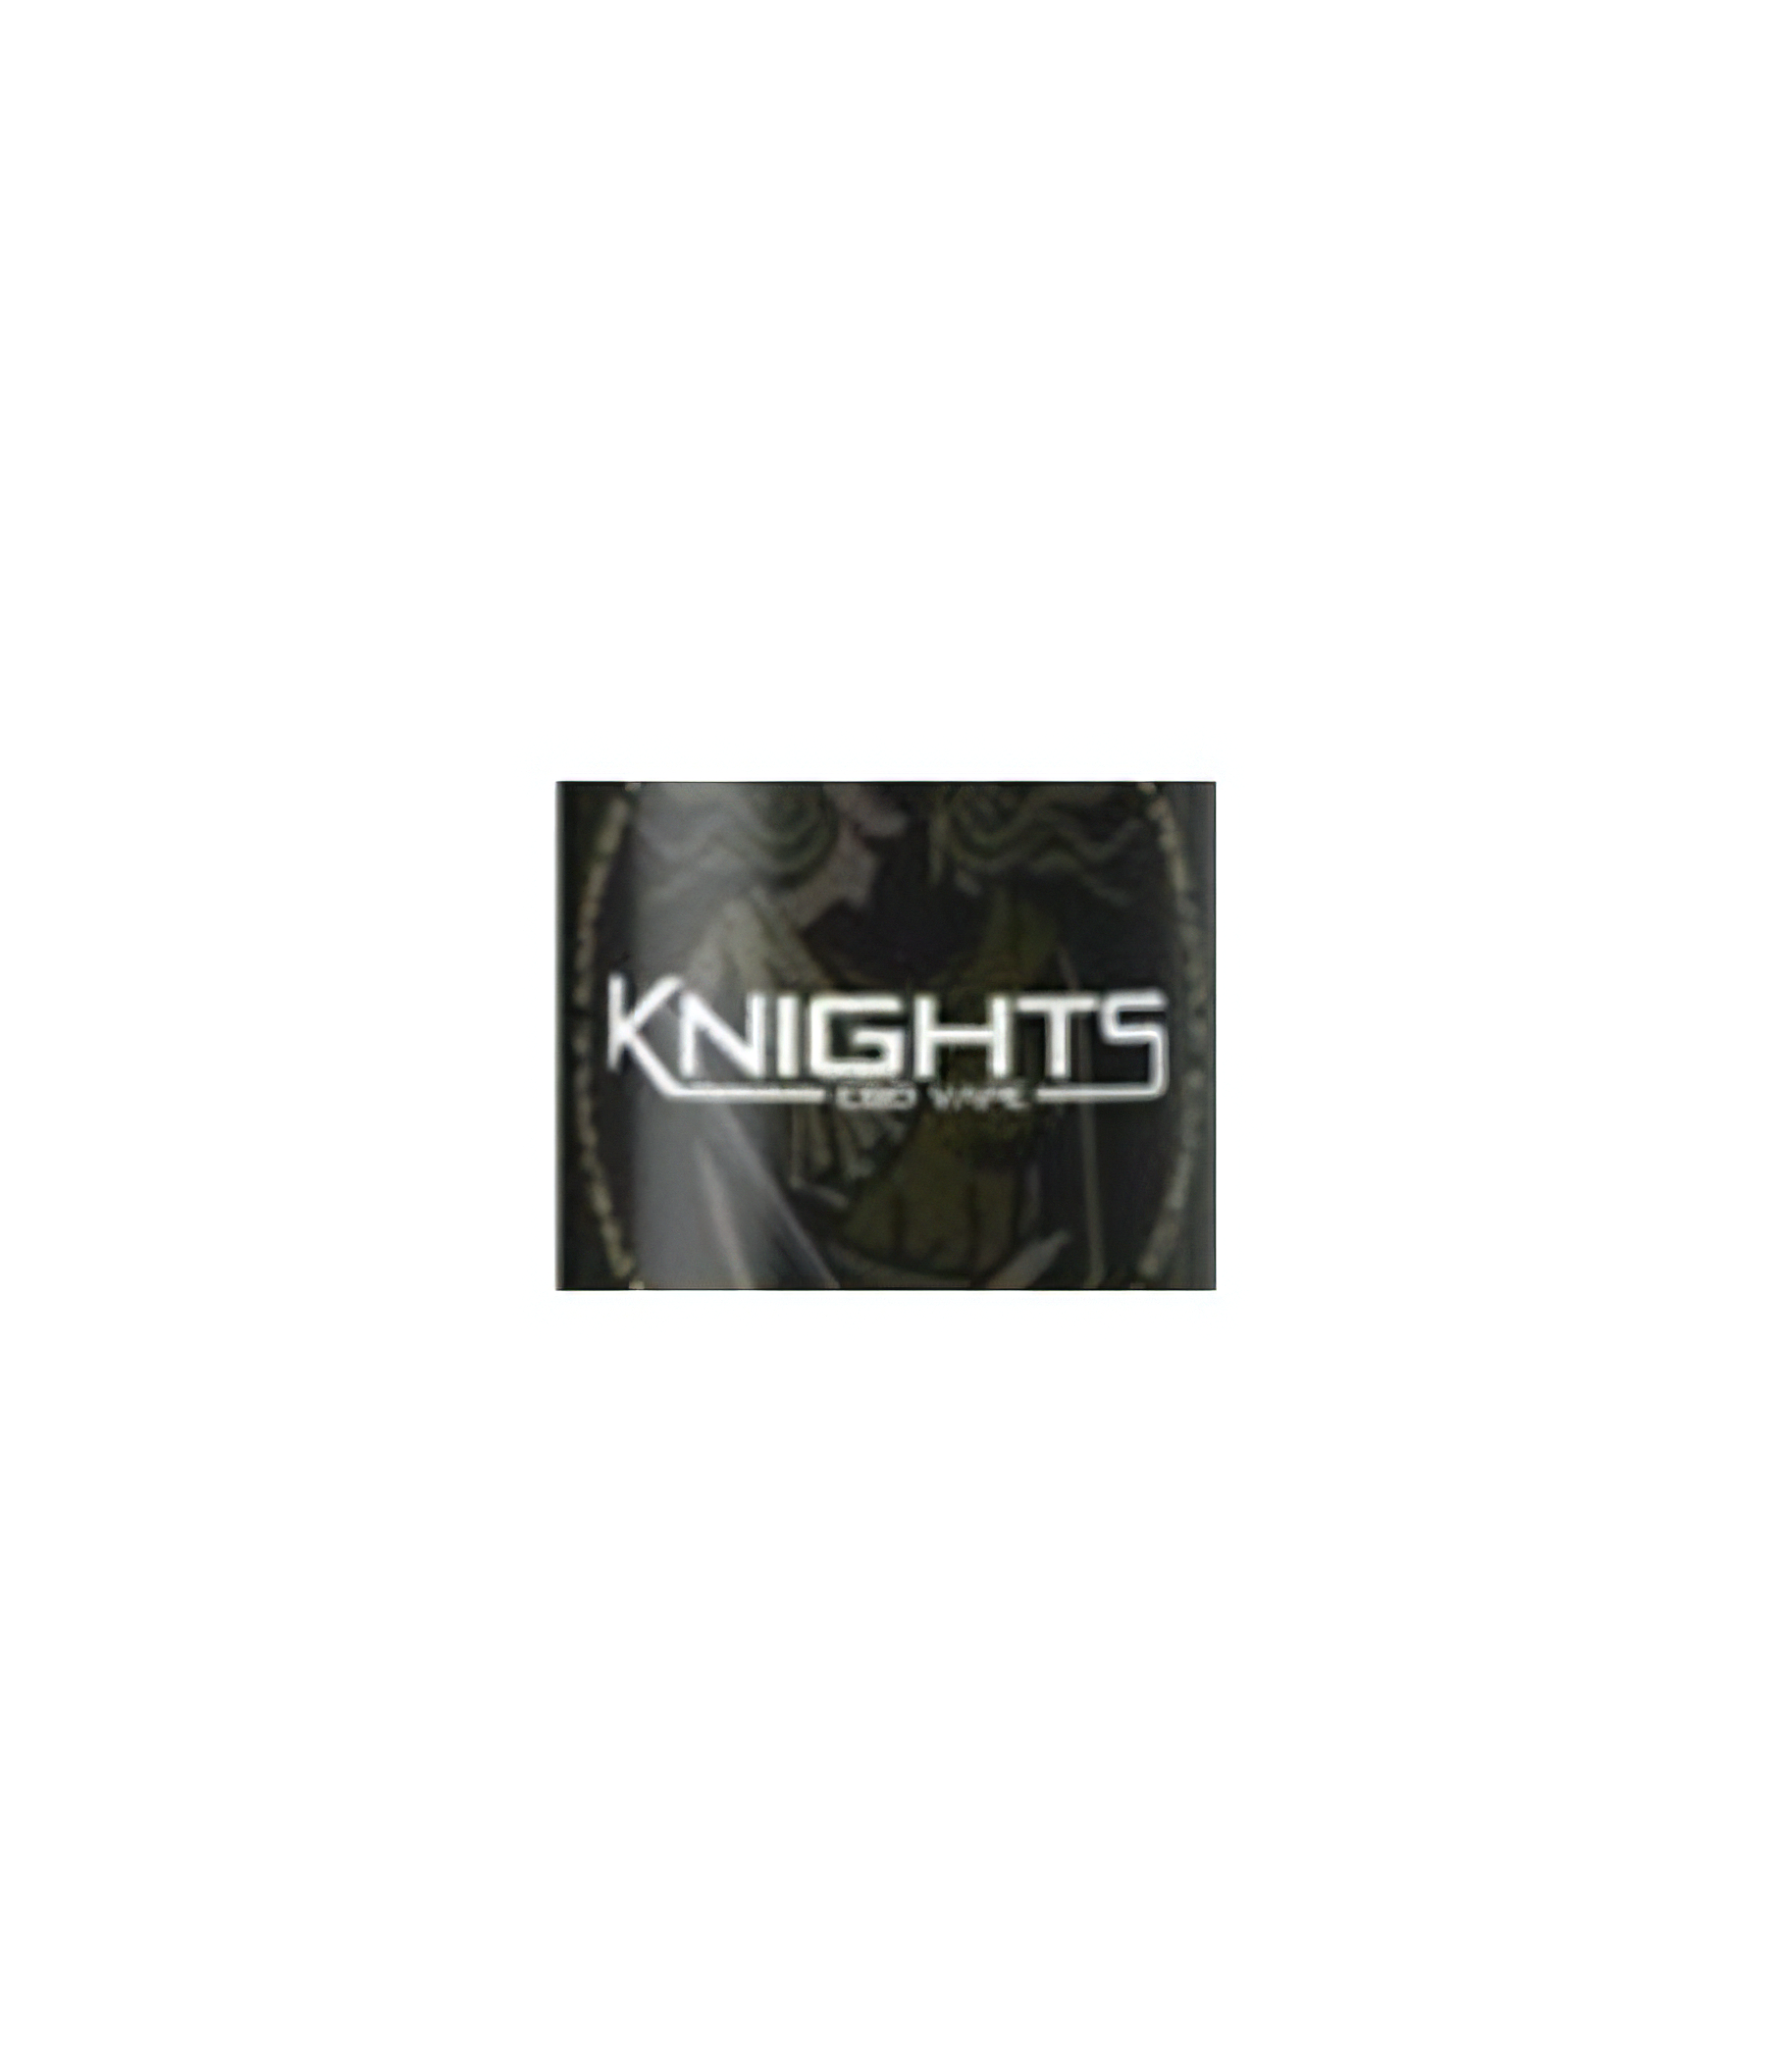 Knights CBD